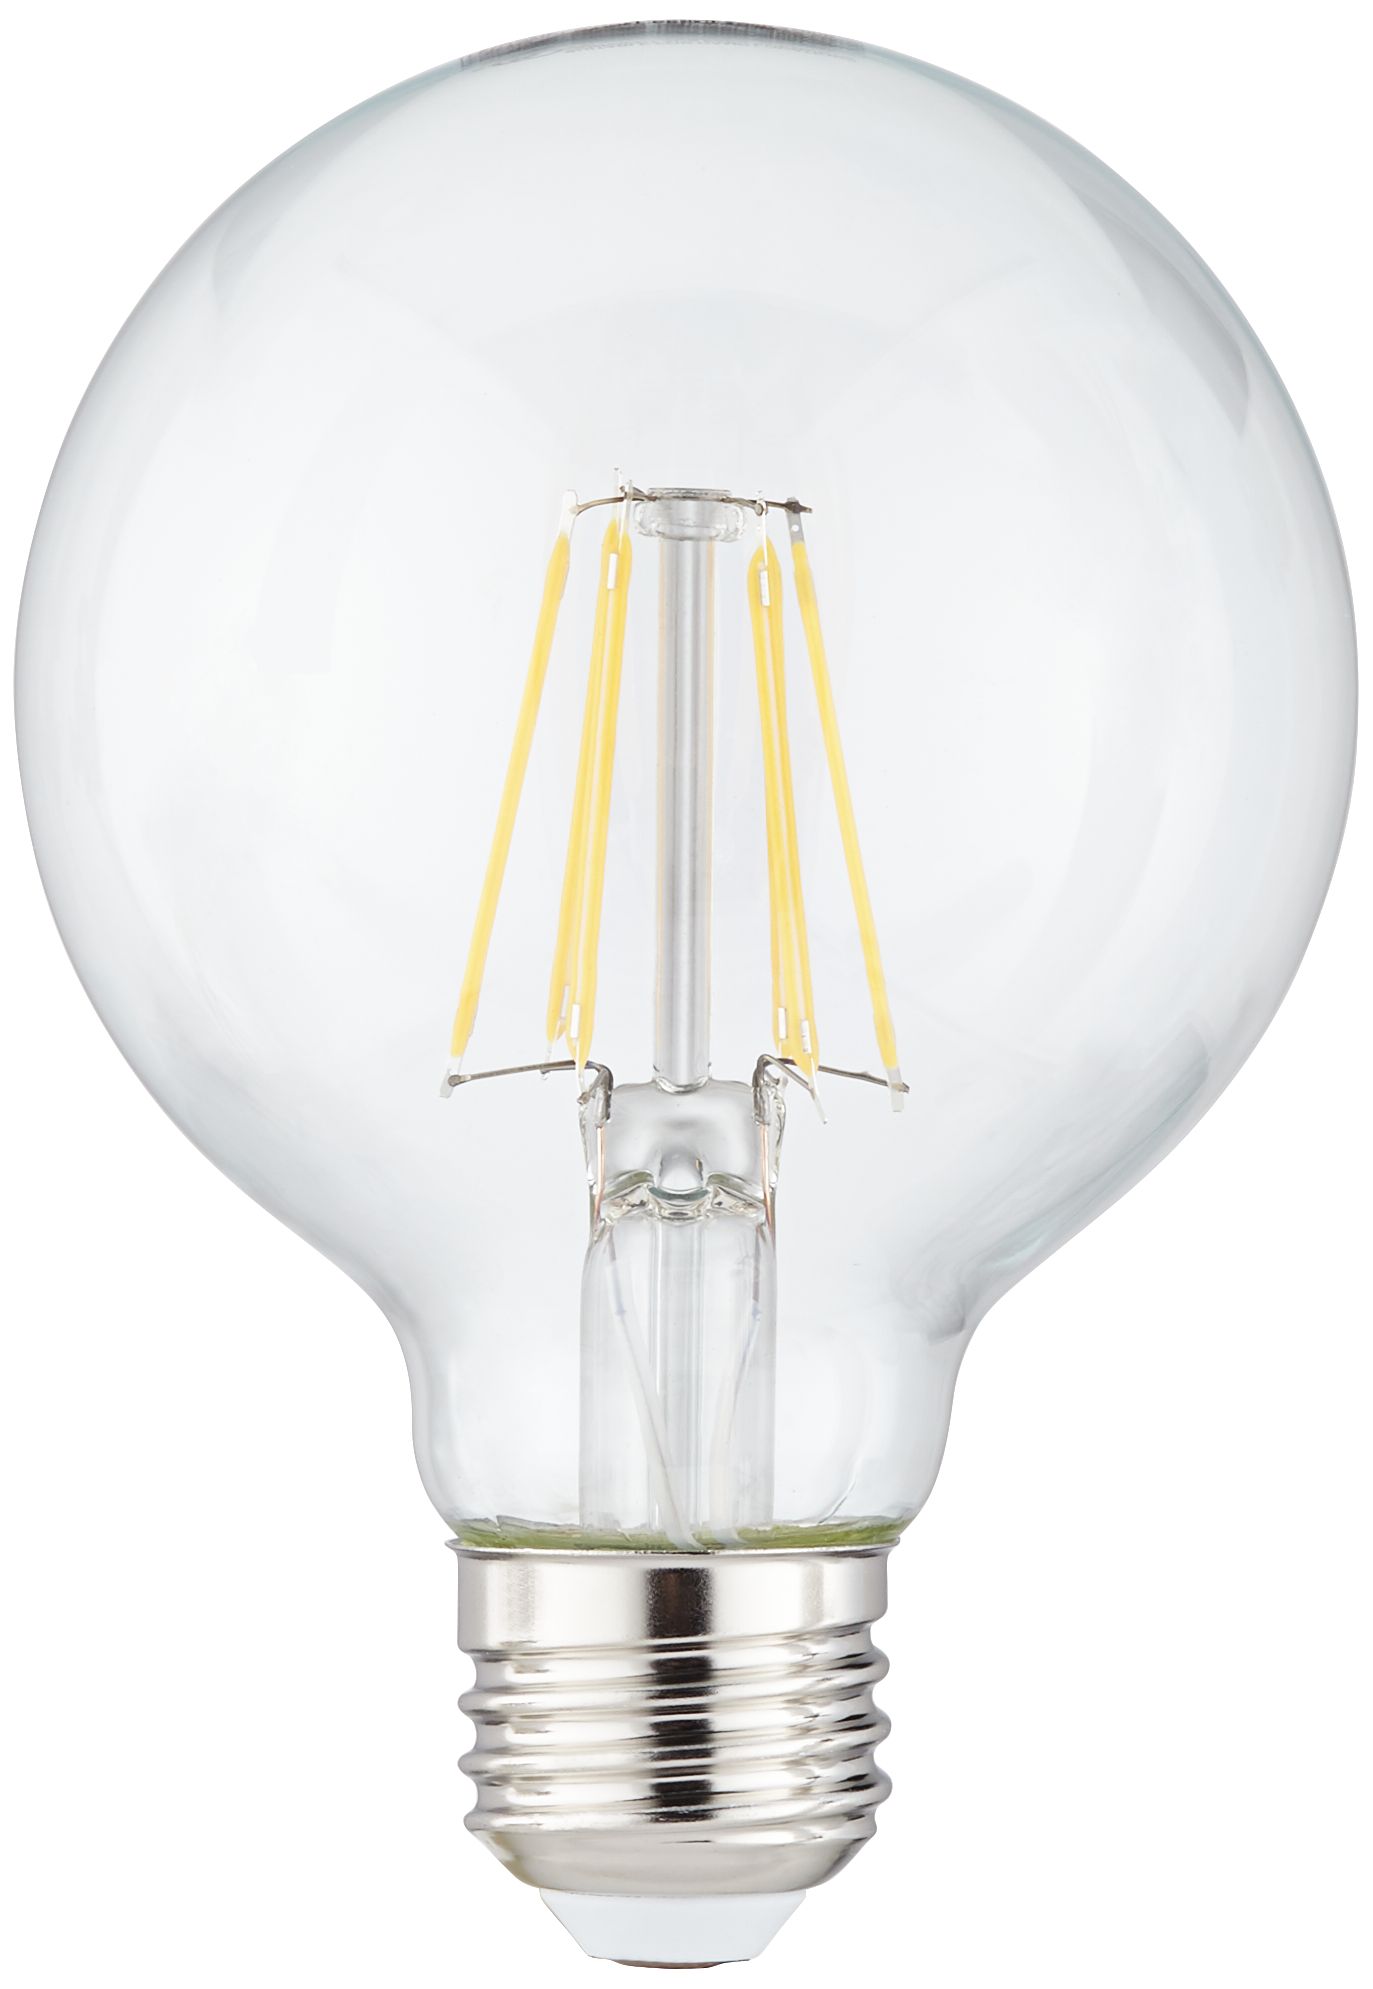 4x 100W Standard Incandescent B22 Filament Lamps Dimmable Pearl GLS Light Bulbs